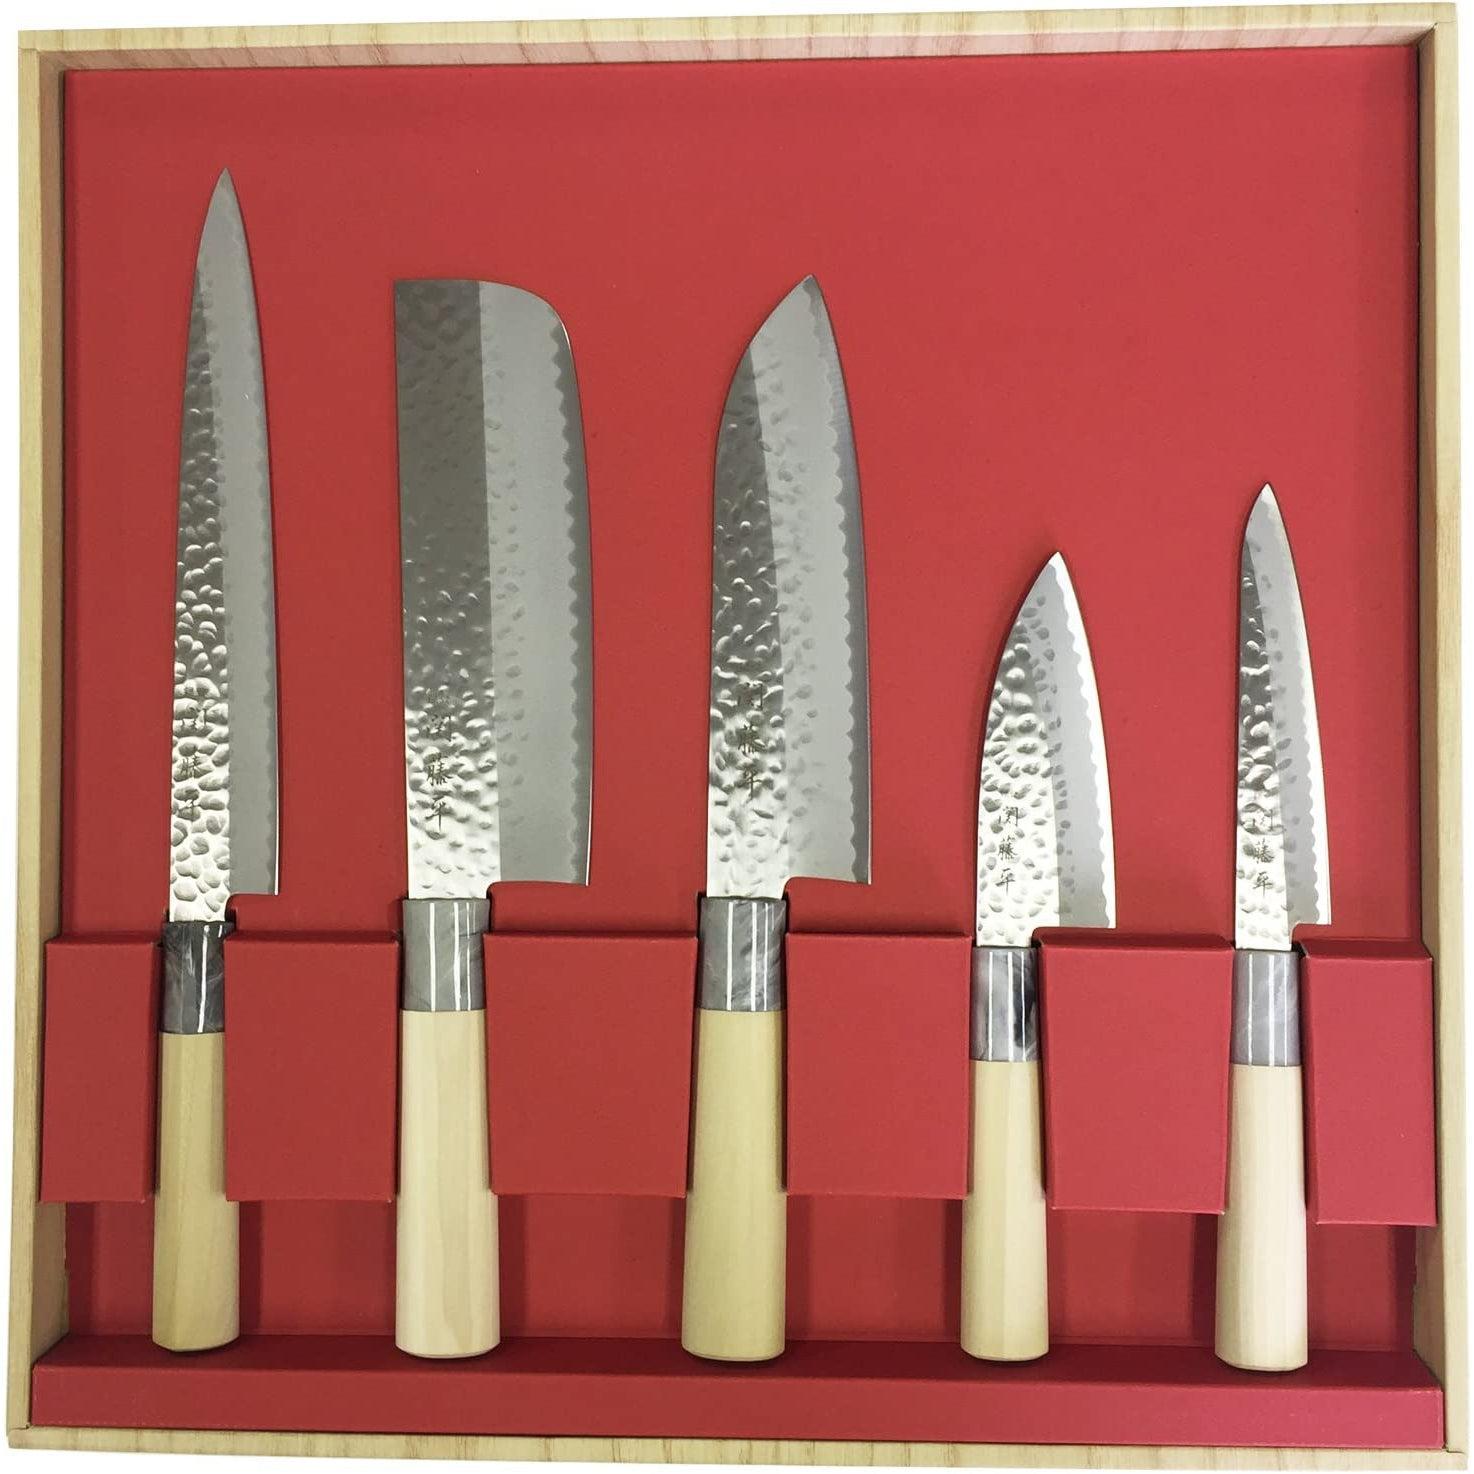  Kitchen Knife Sets, Kitchen Knives Stainless steel 5